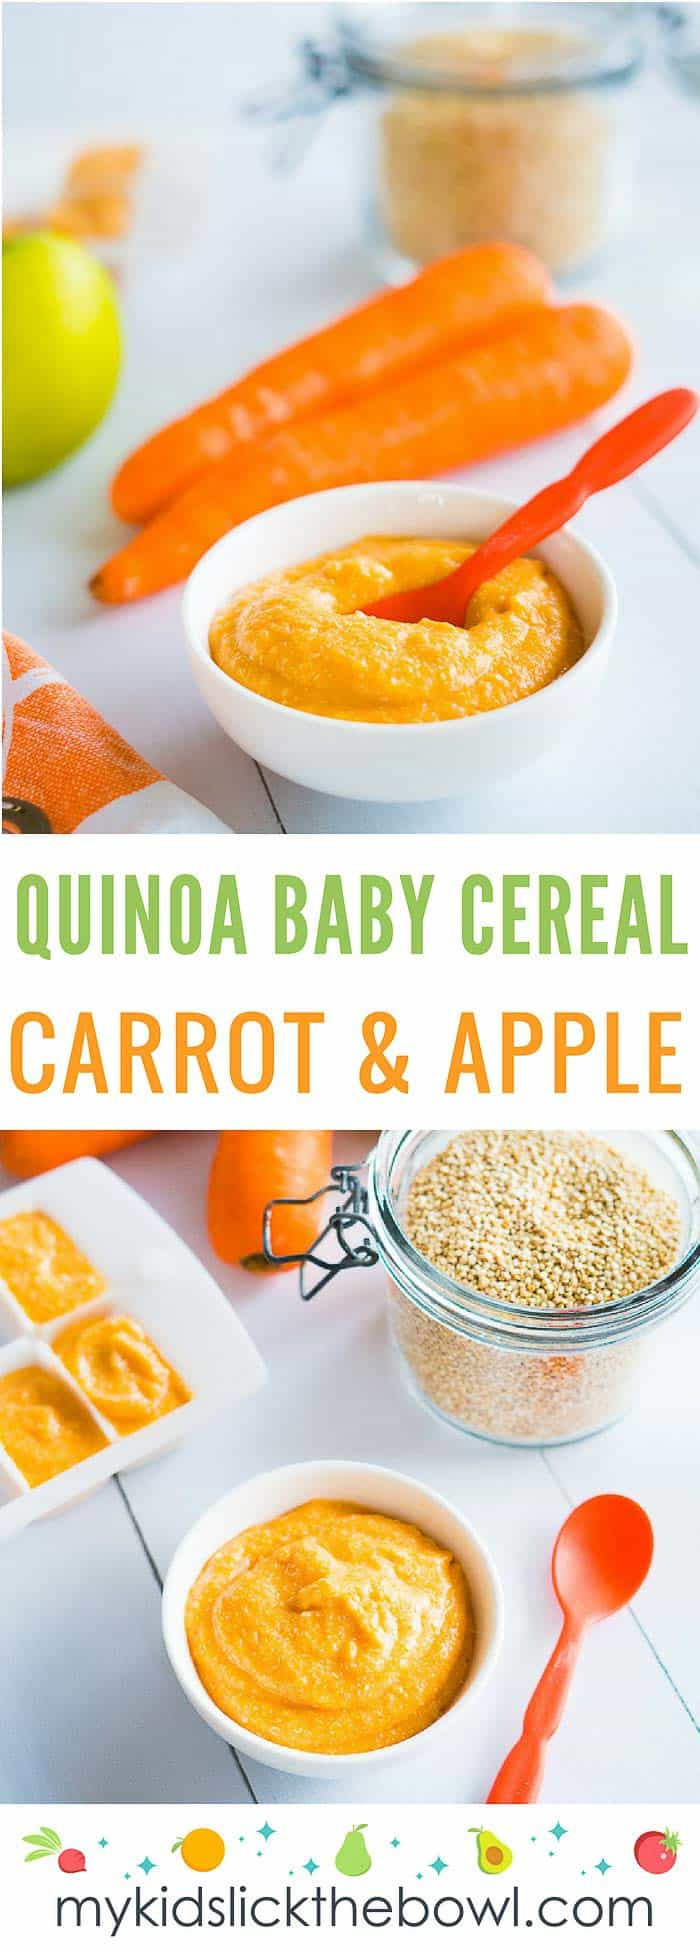 Quinoa Baby Recipes
 Quinoa Baby Cereal Carrot and Apple Alternative to